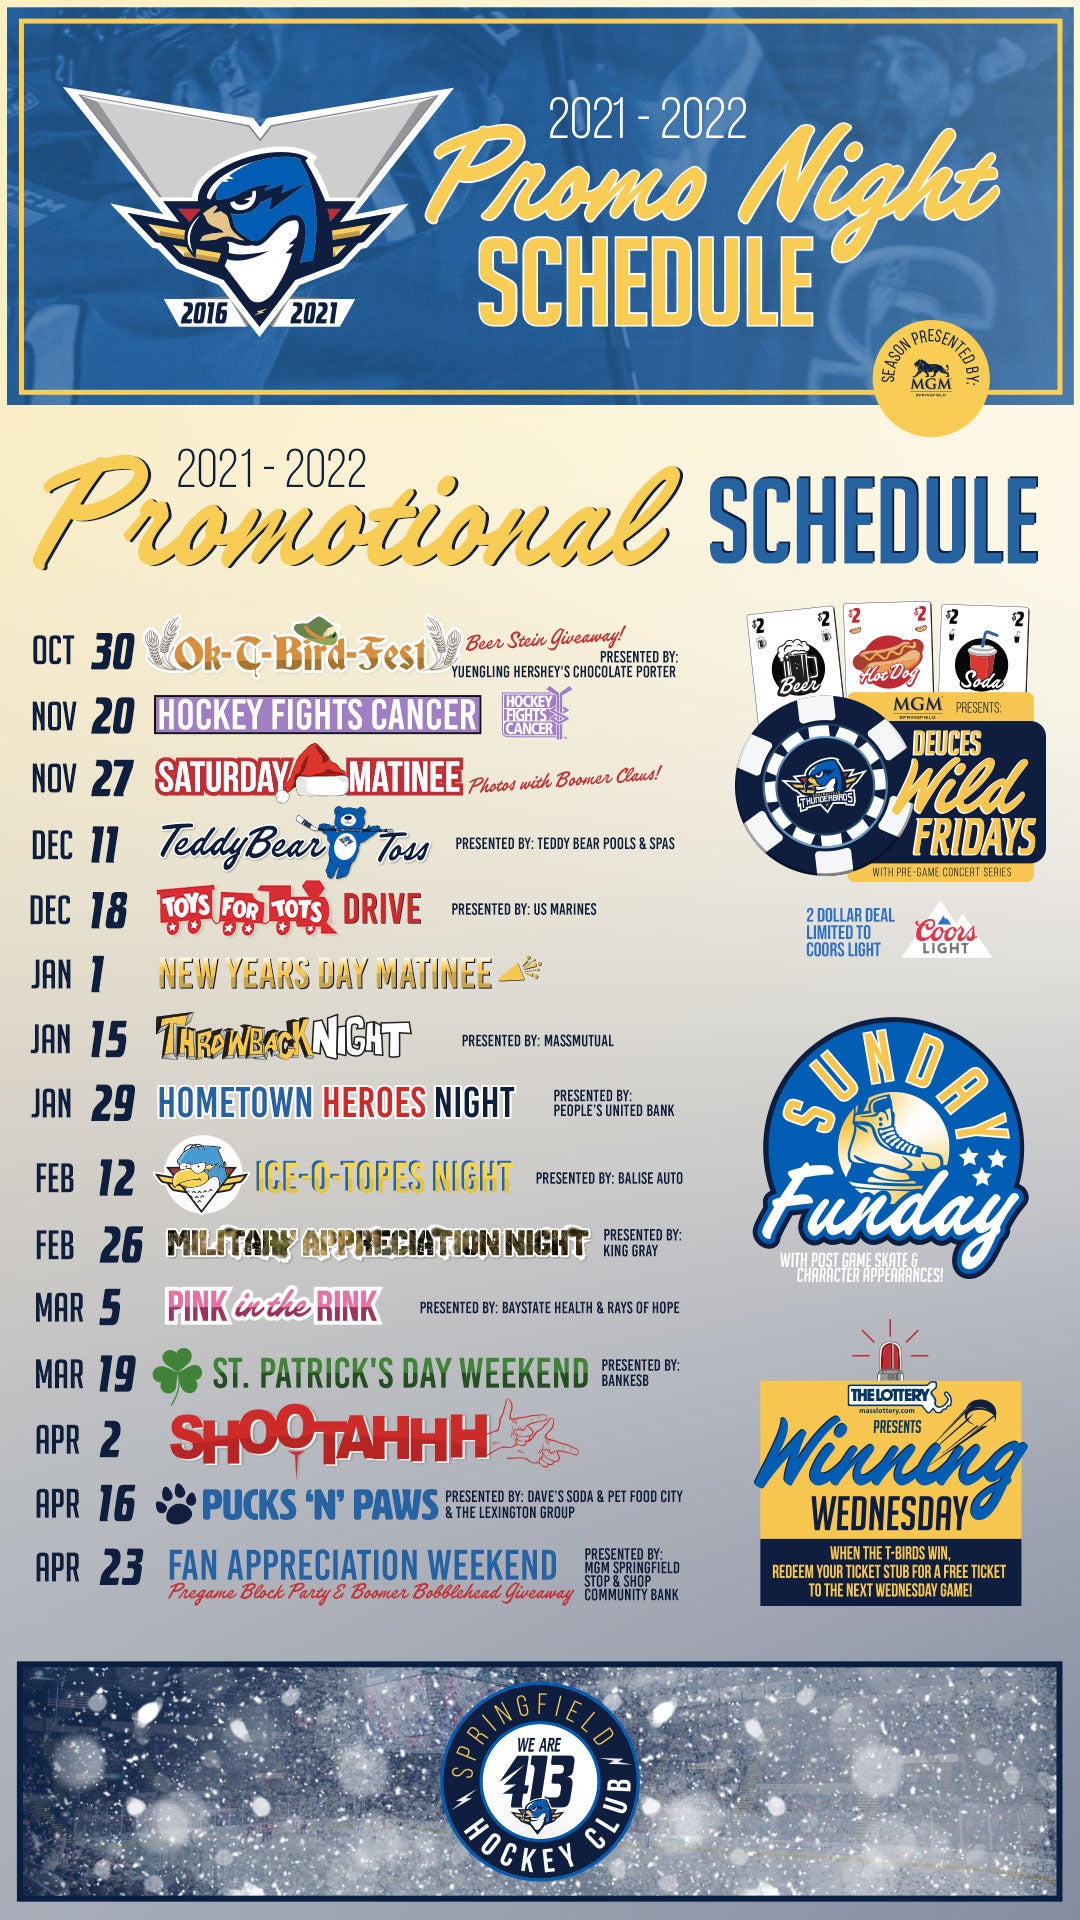 St. Louis Blues unveil 2023-24 theme nights, promotions